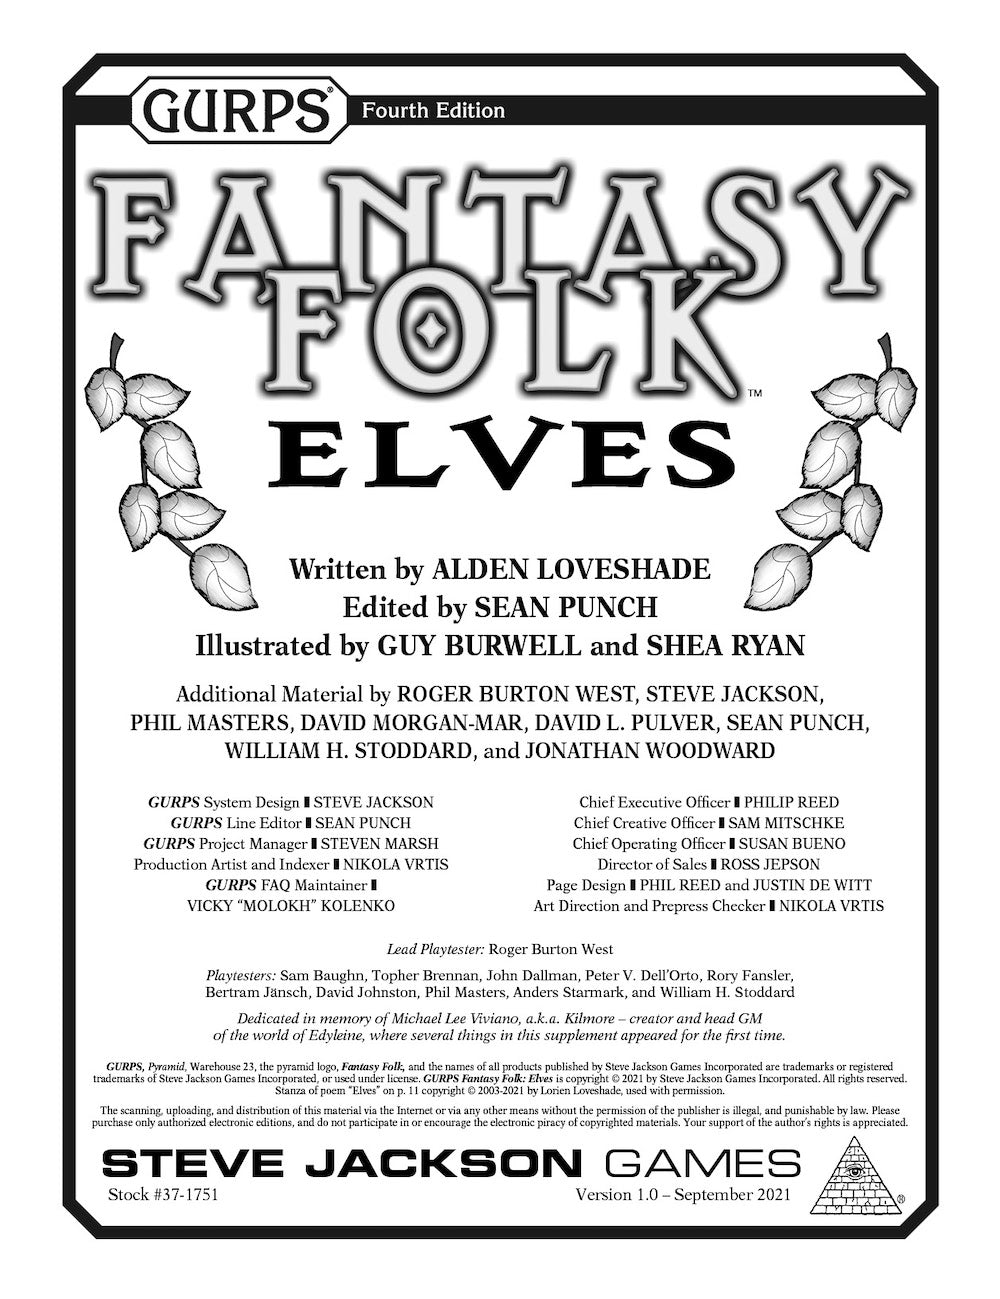 GURPS Fantasy Folk: Elves